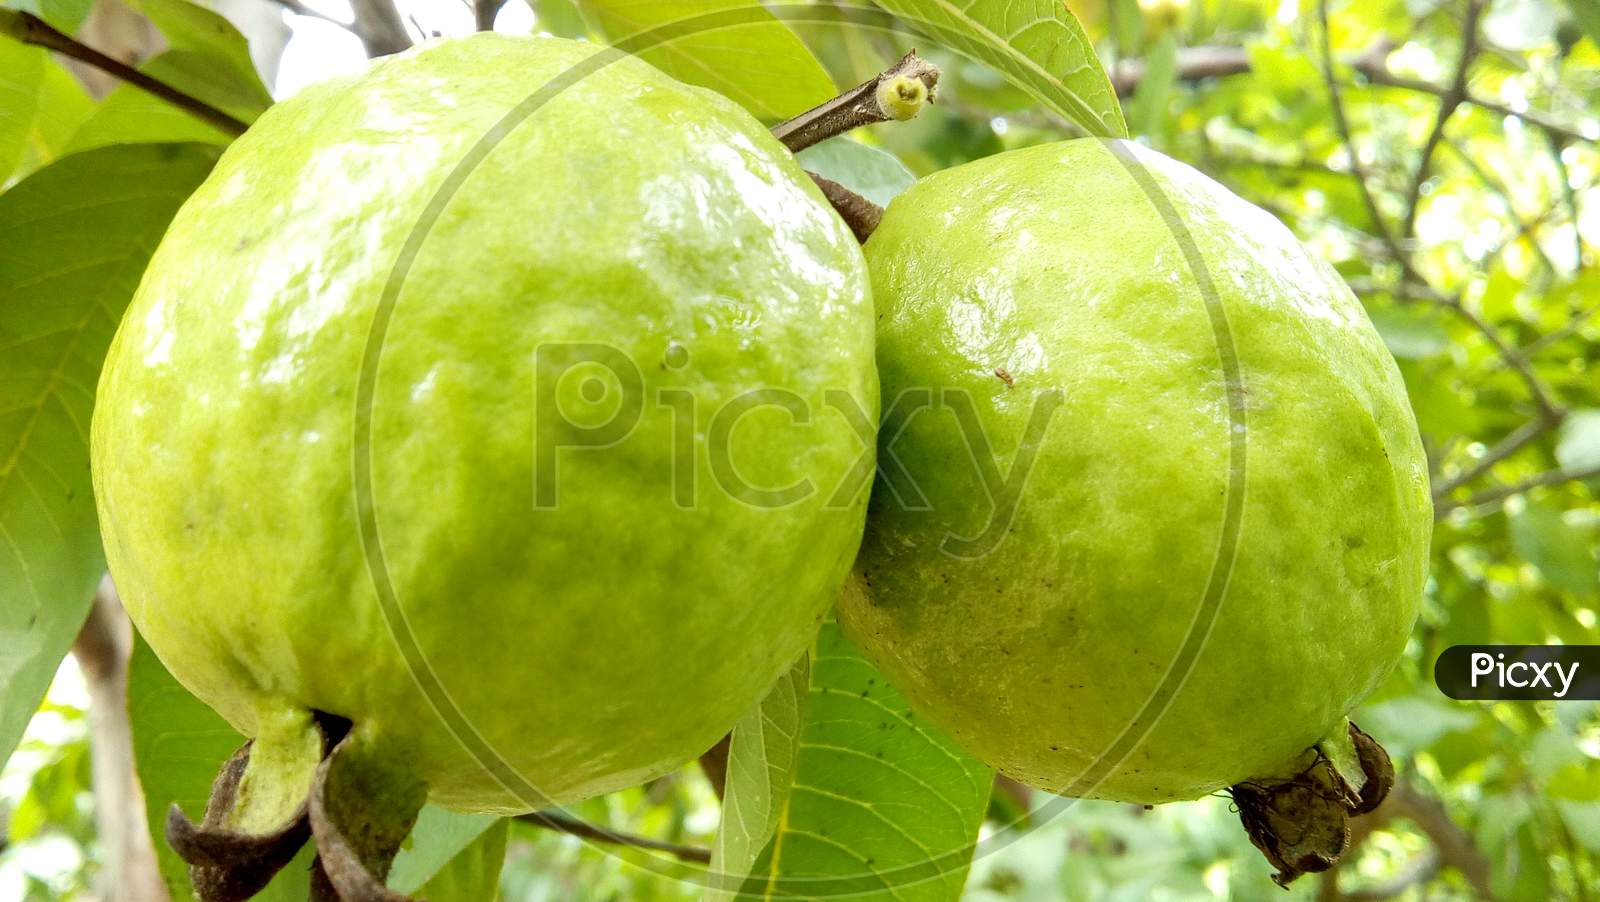 Tasty green Guavas